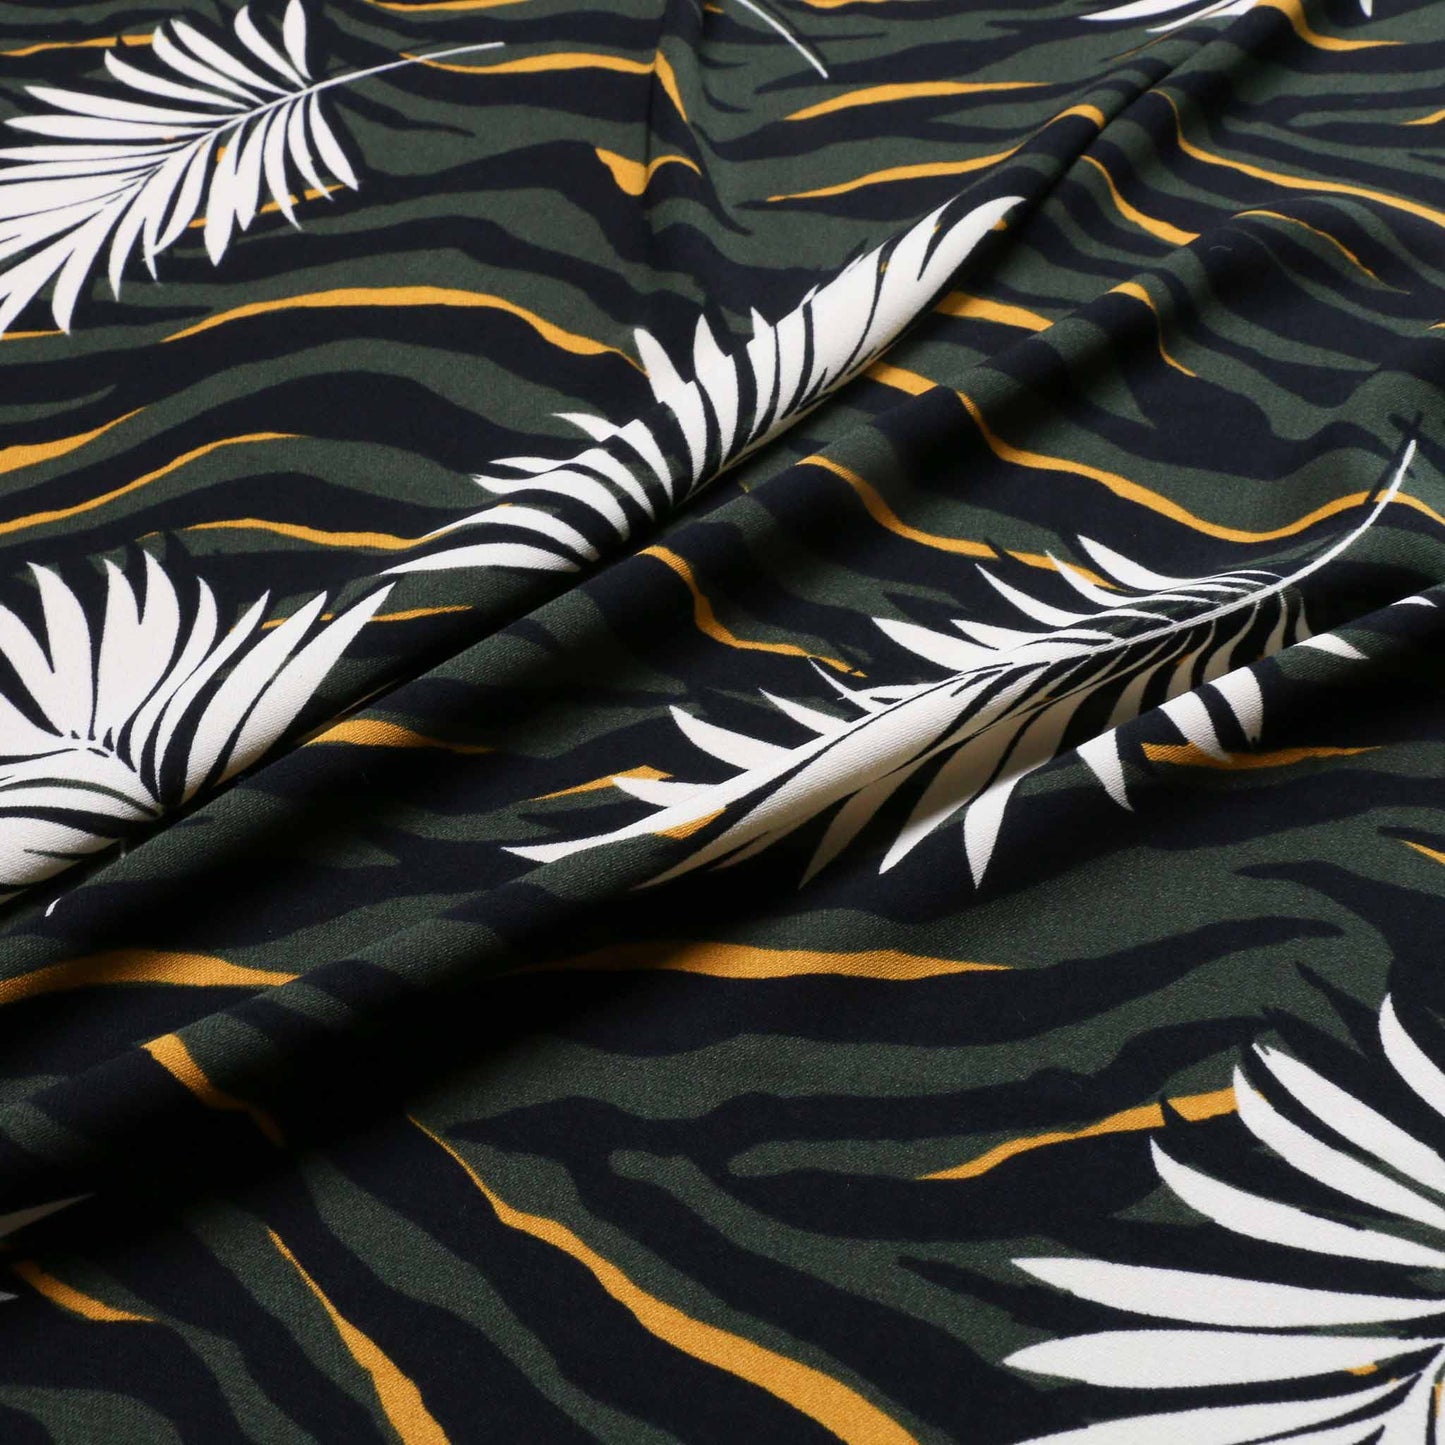 khaki and yellow challis dressmaking fabric with tropical leaf and zebra print